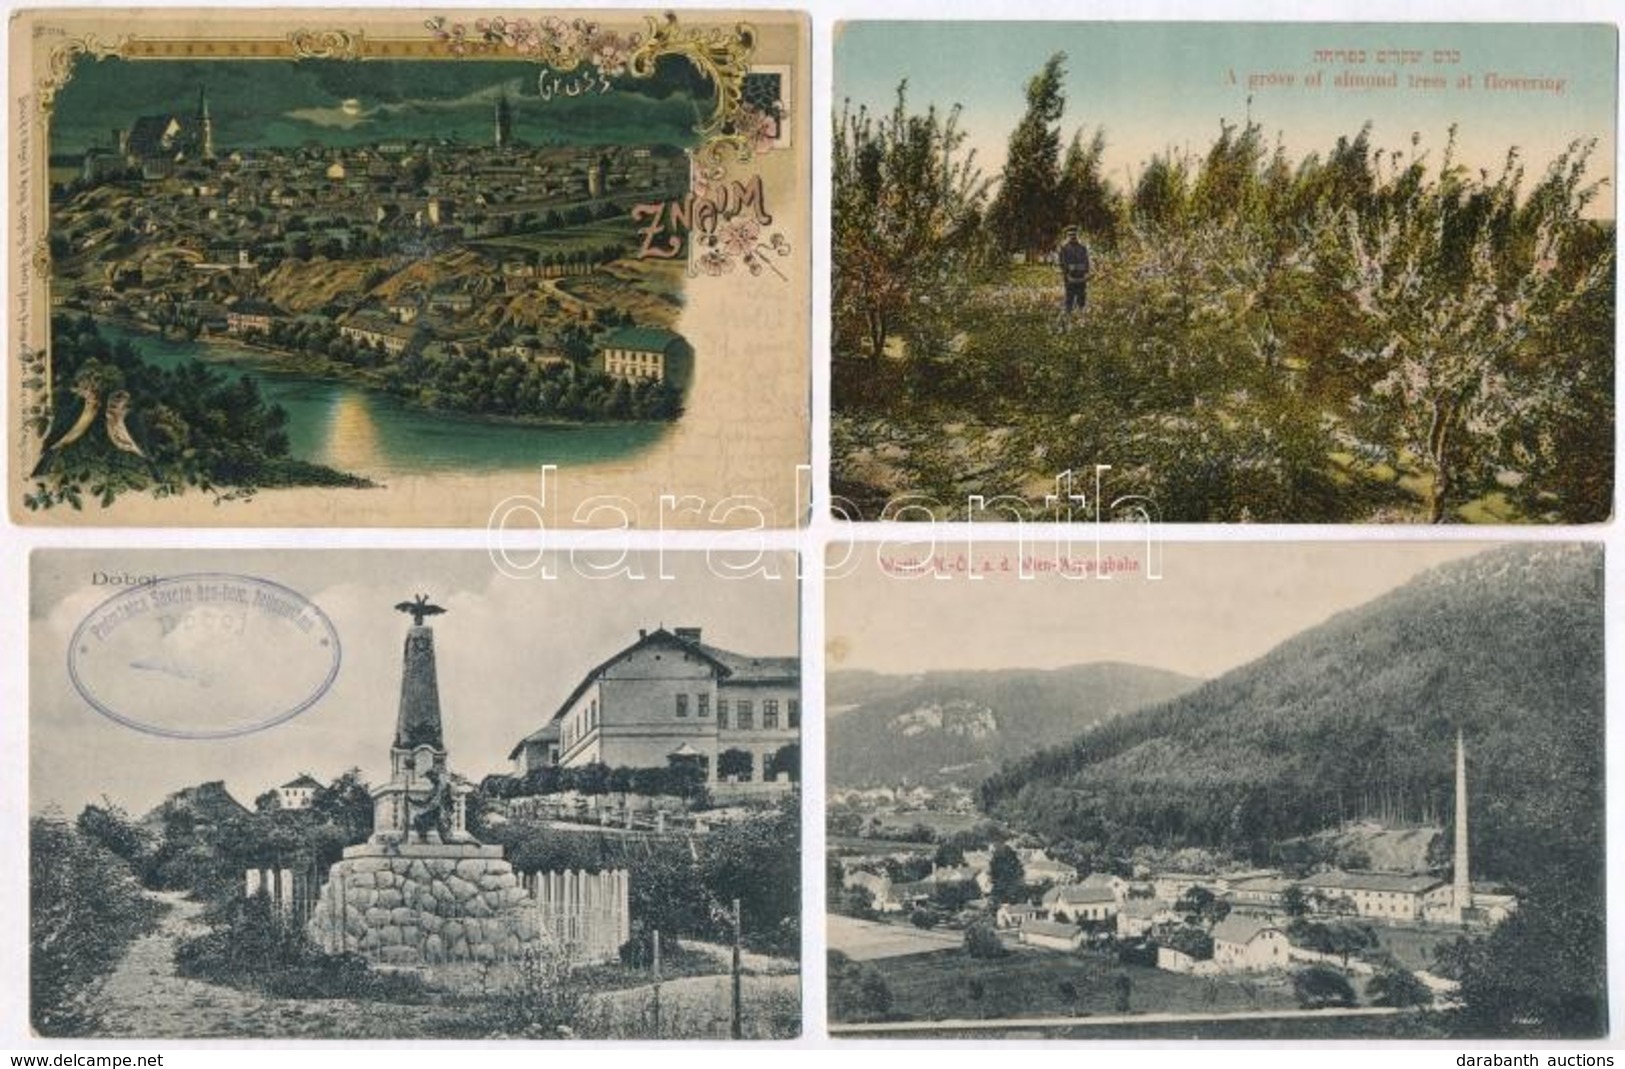 ** * 6 Db RÉGI Külföldi Városképes Lap, 1 Znaim Litho / 6 Pre-1945 European Town-view Postcards, 1 Znojmo Litho - Ohne Zuordnung